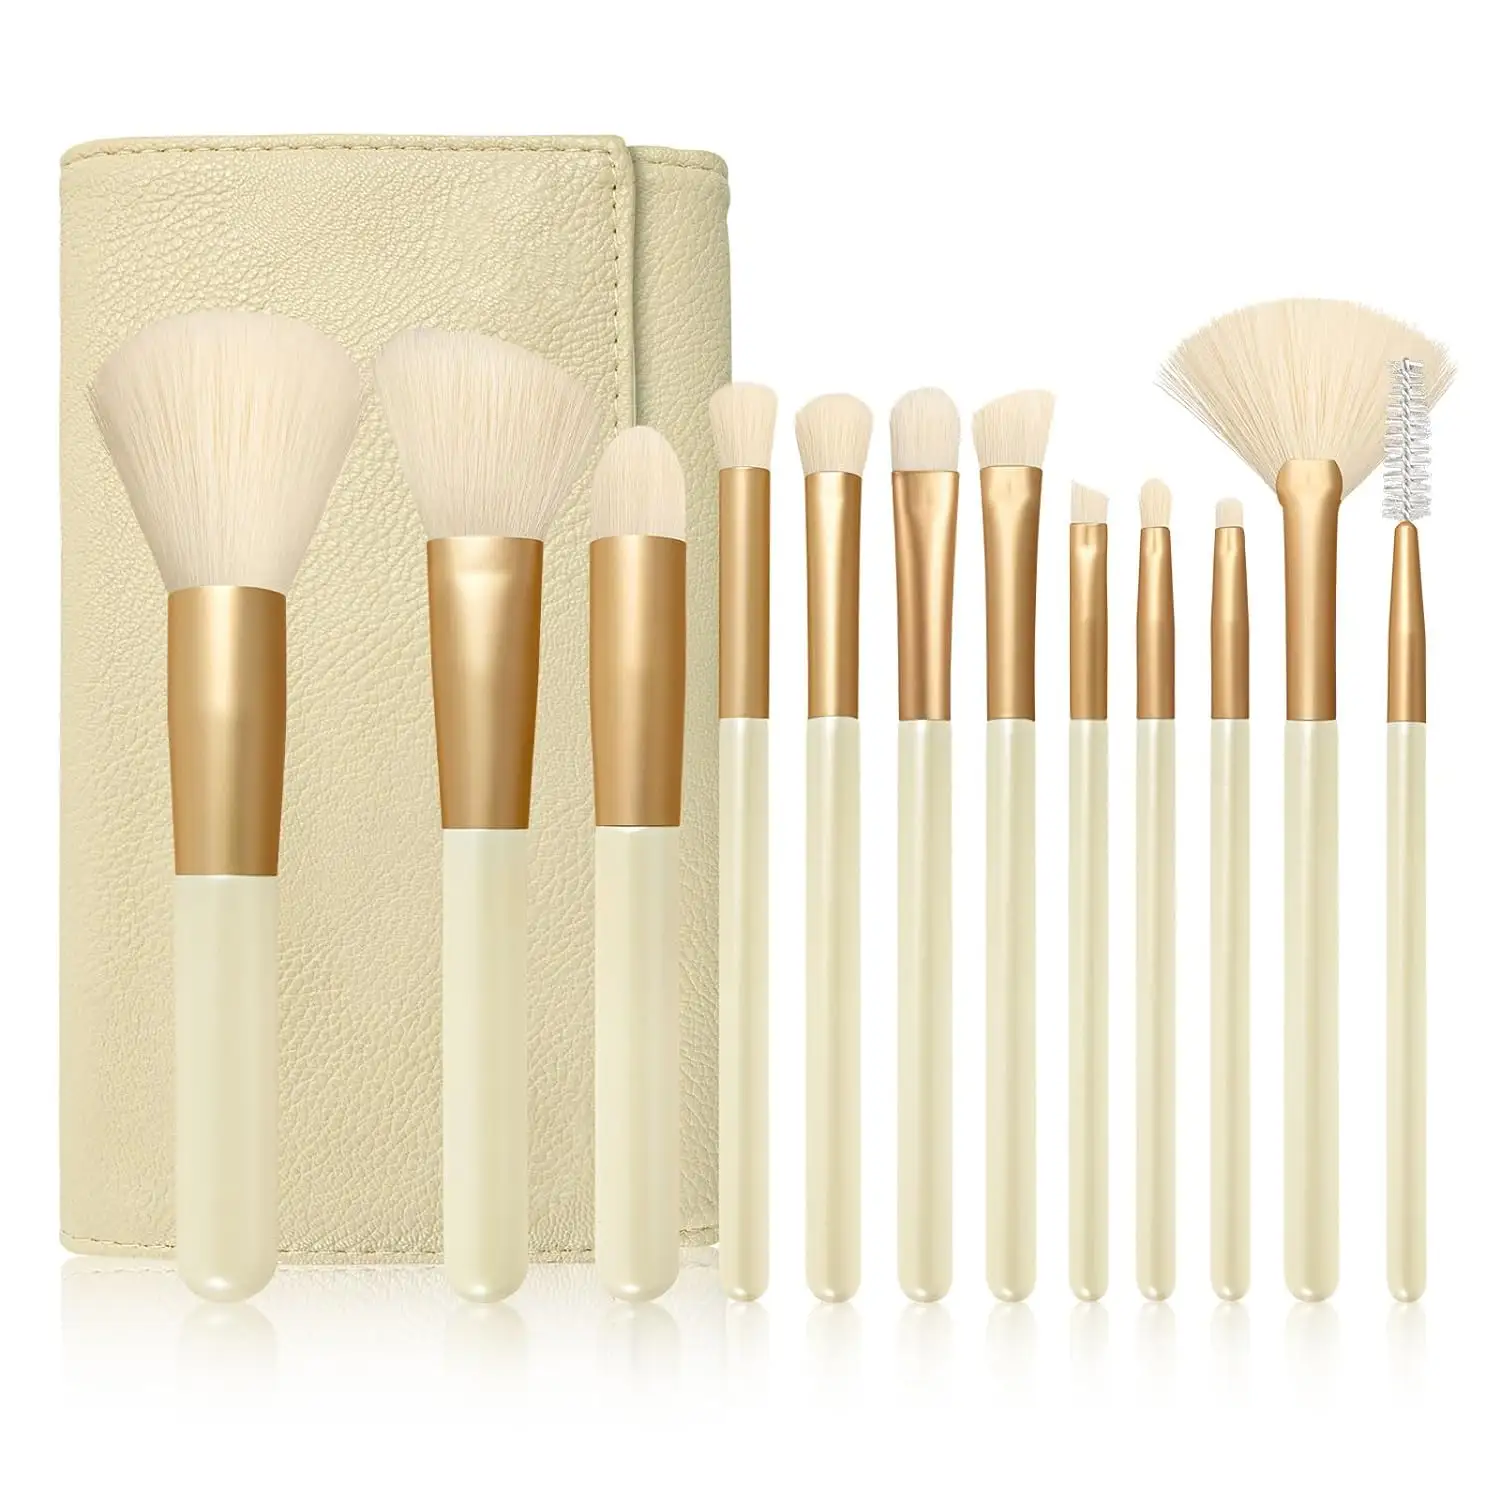 Emas Set kuas Makeup wanita, kuas Makeup profesional Premium lembut 12 buah